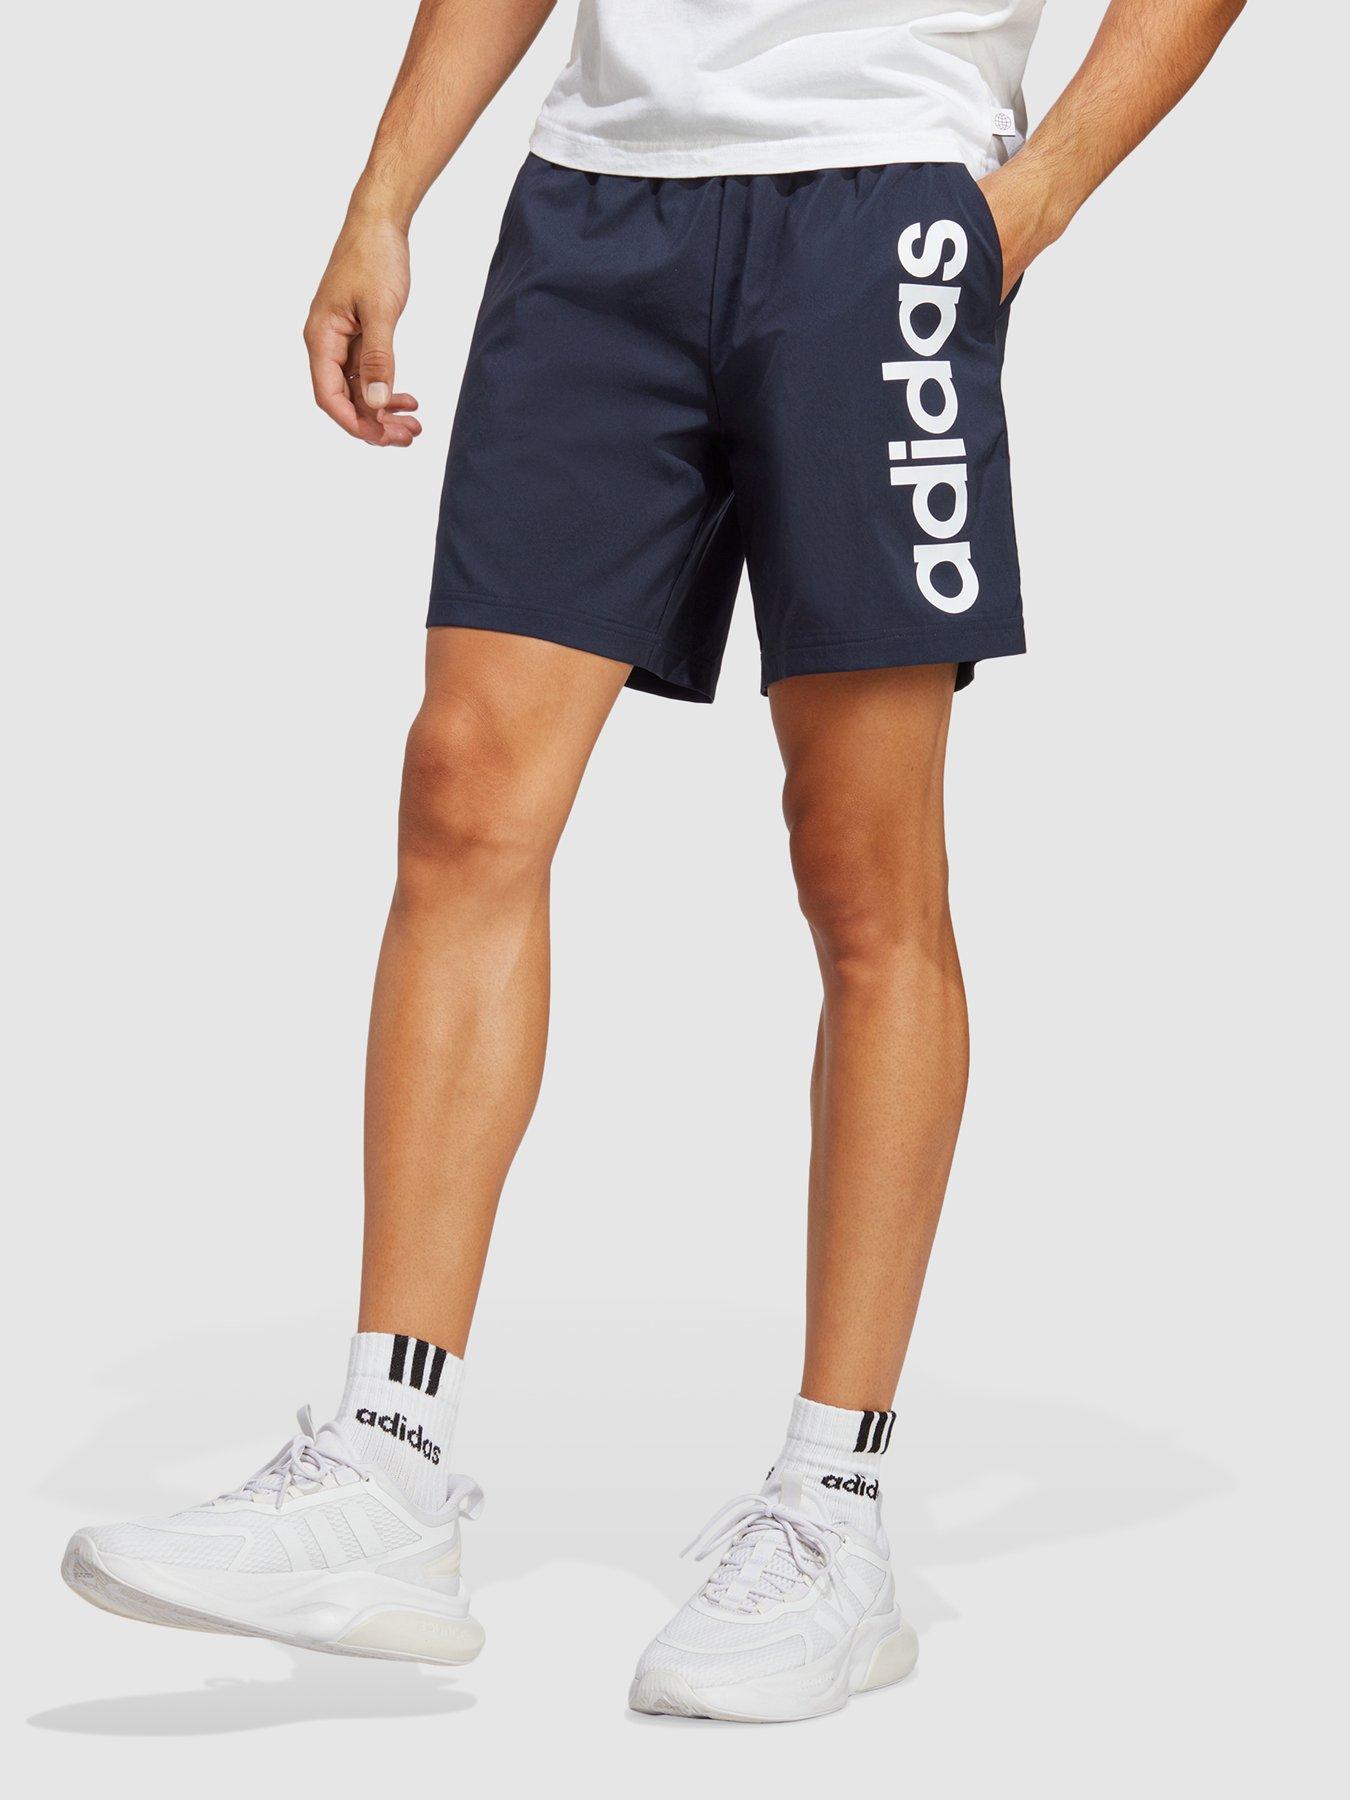 Shorts Adidas Logo Linear Chelsea Preto e Branco 